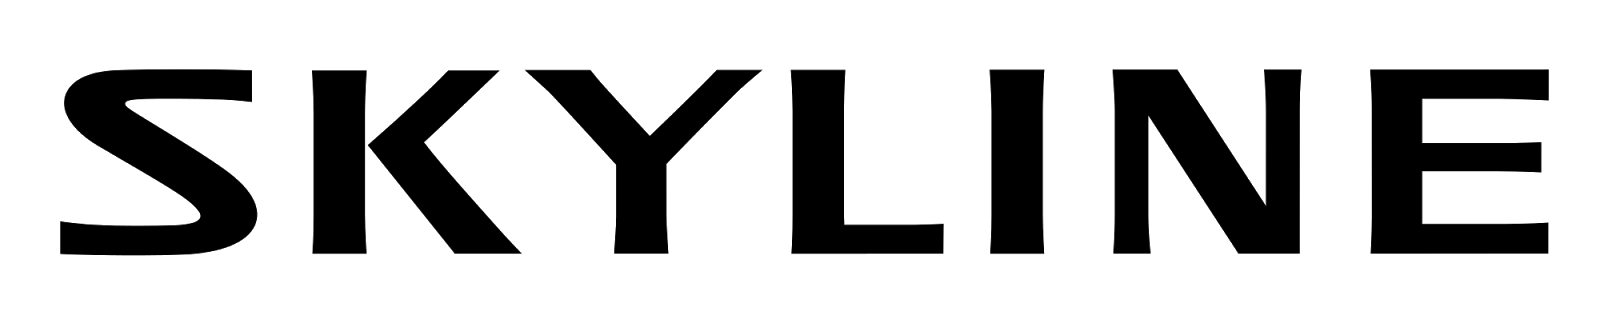 R32 Skyline Logo